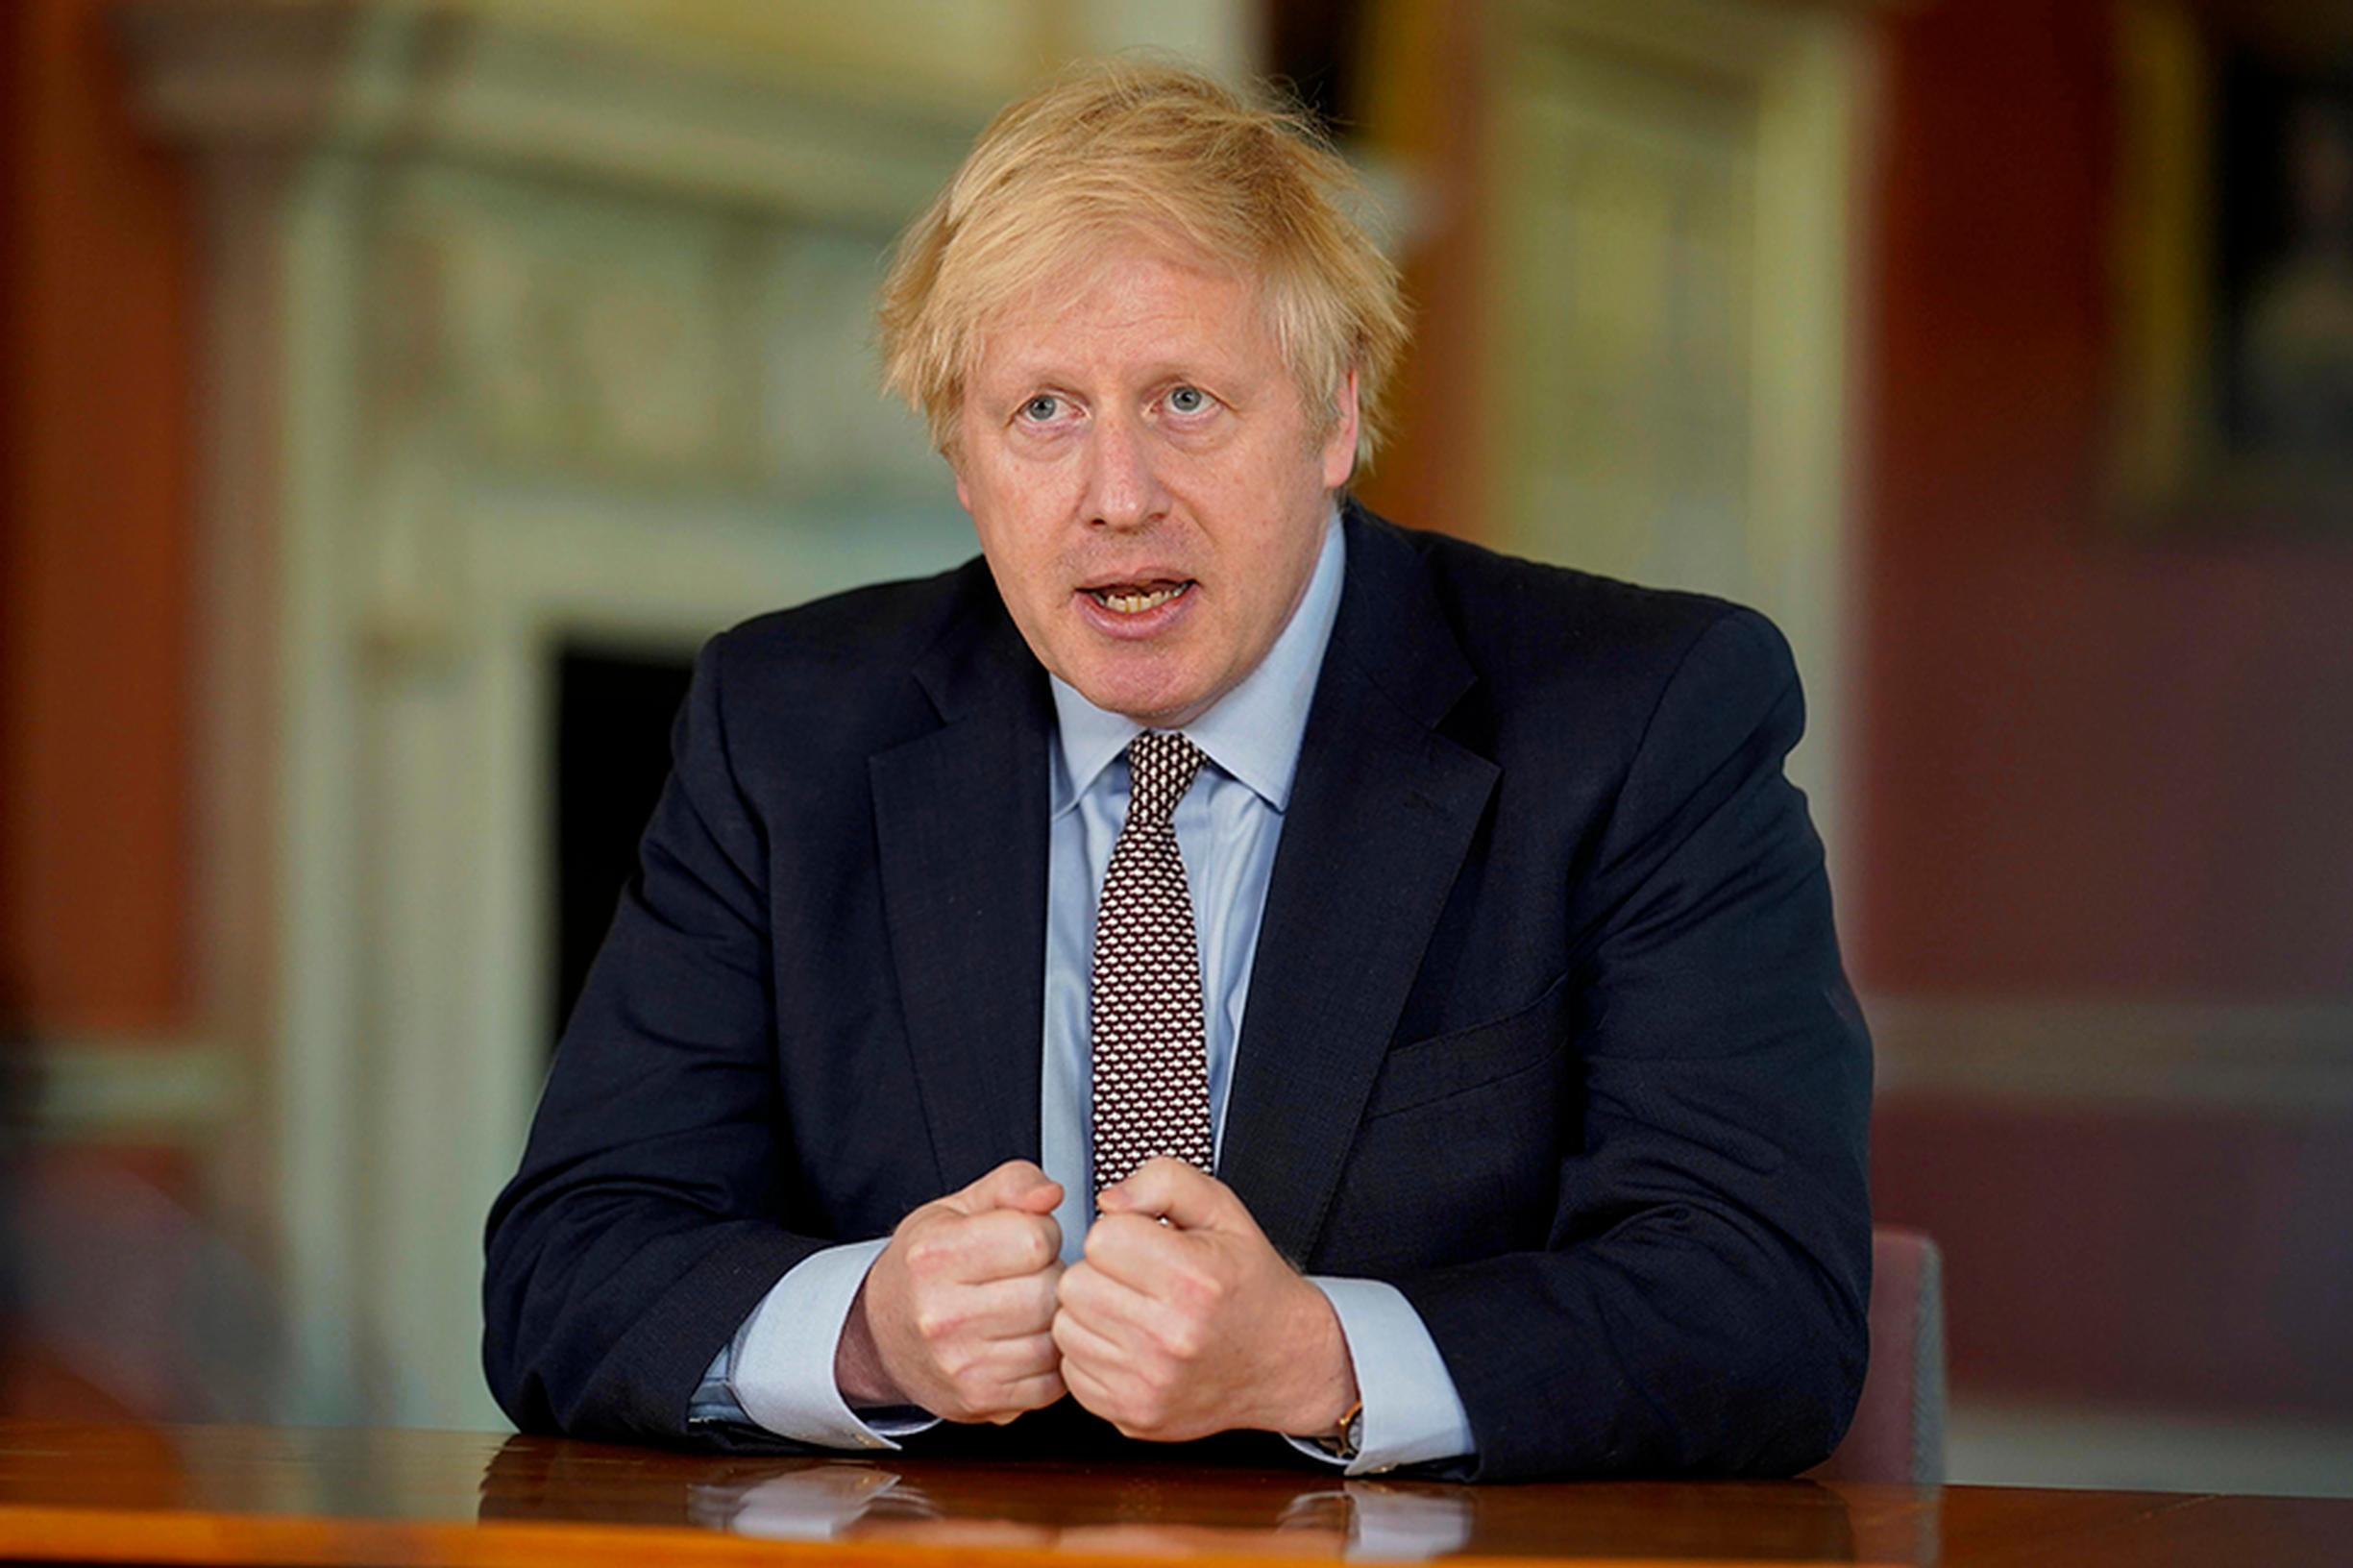 Prime Minister Boris Johnson addressing the nation on 10 May